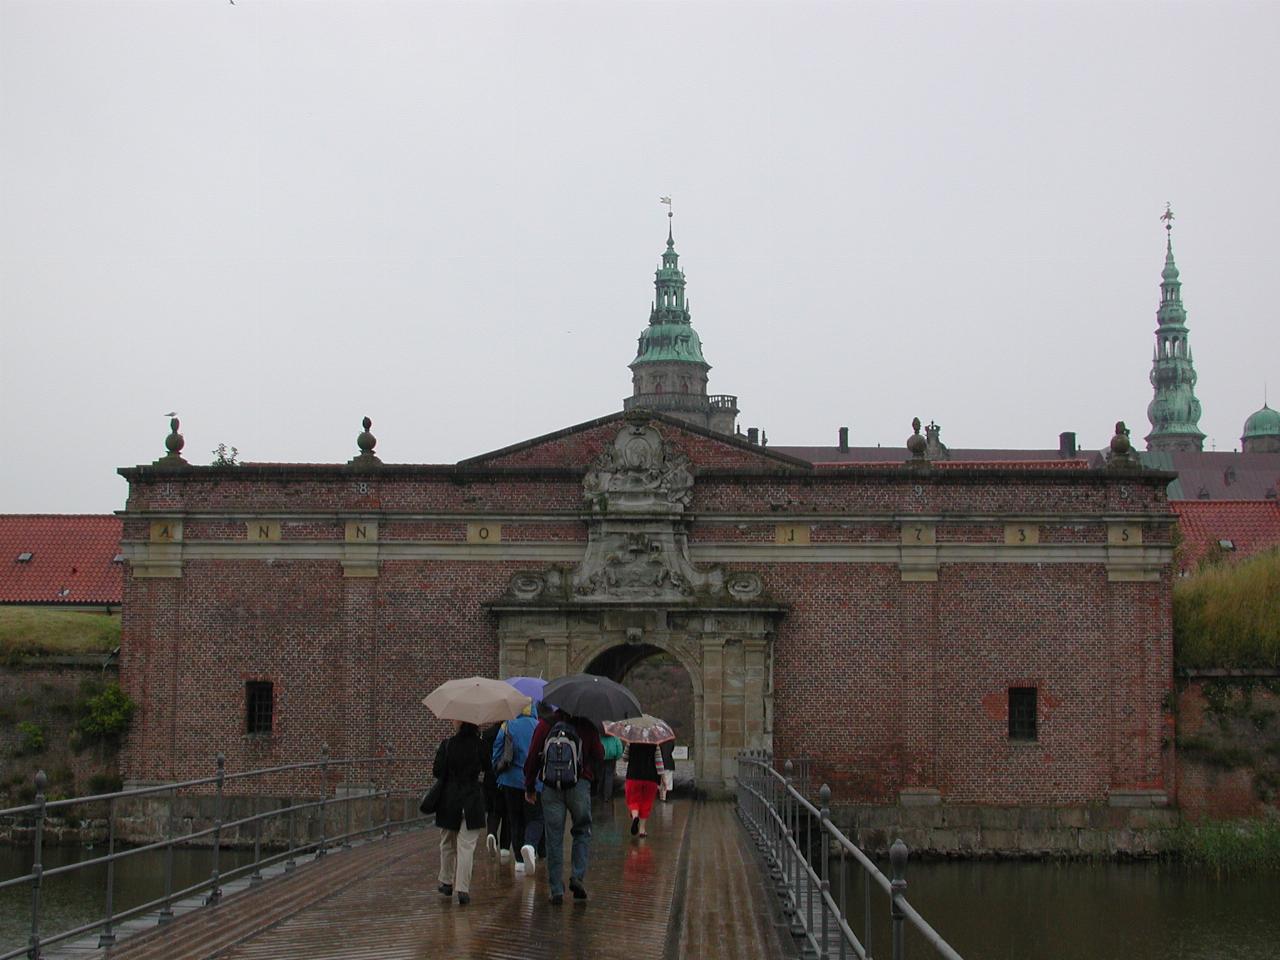 KPLU Viking Jazz: Group crossing the outer moat at Helsingør Slot (Castle)